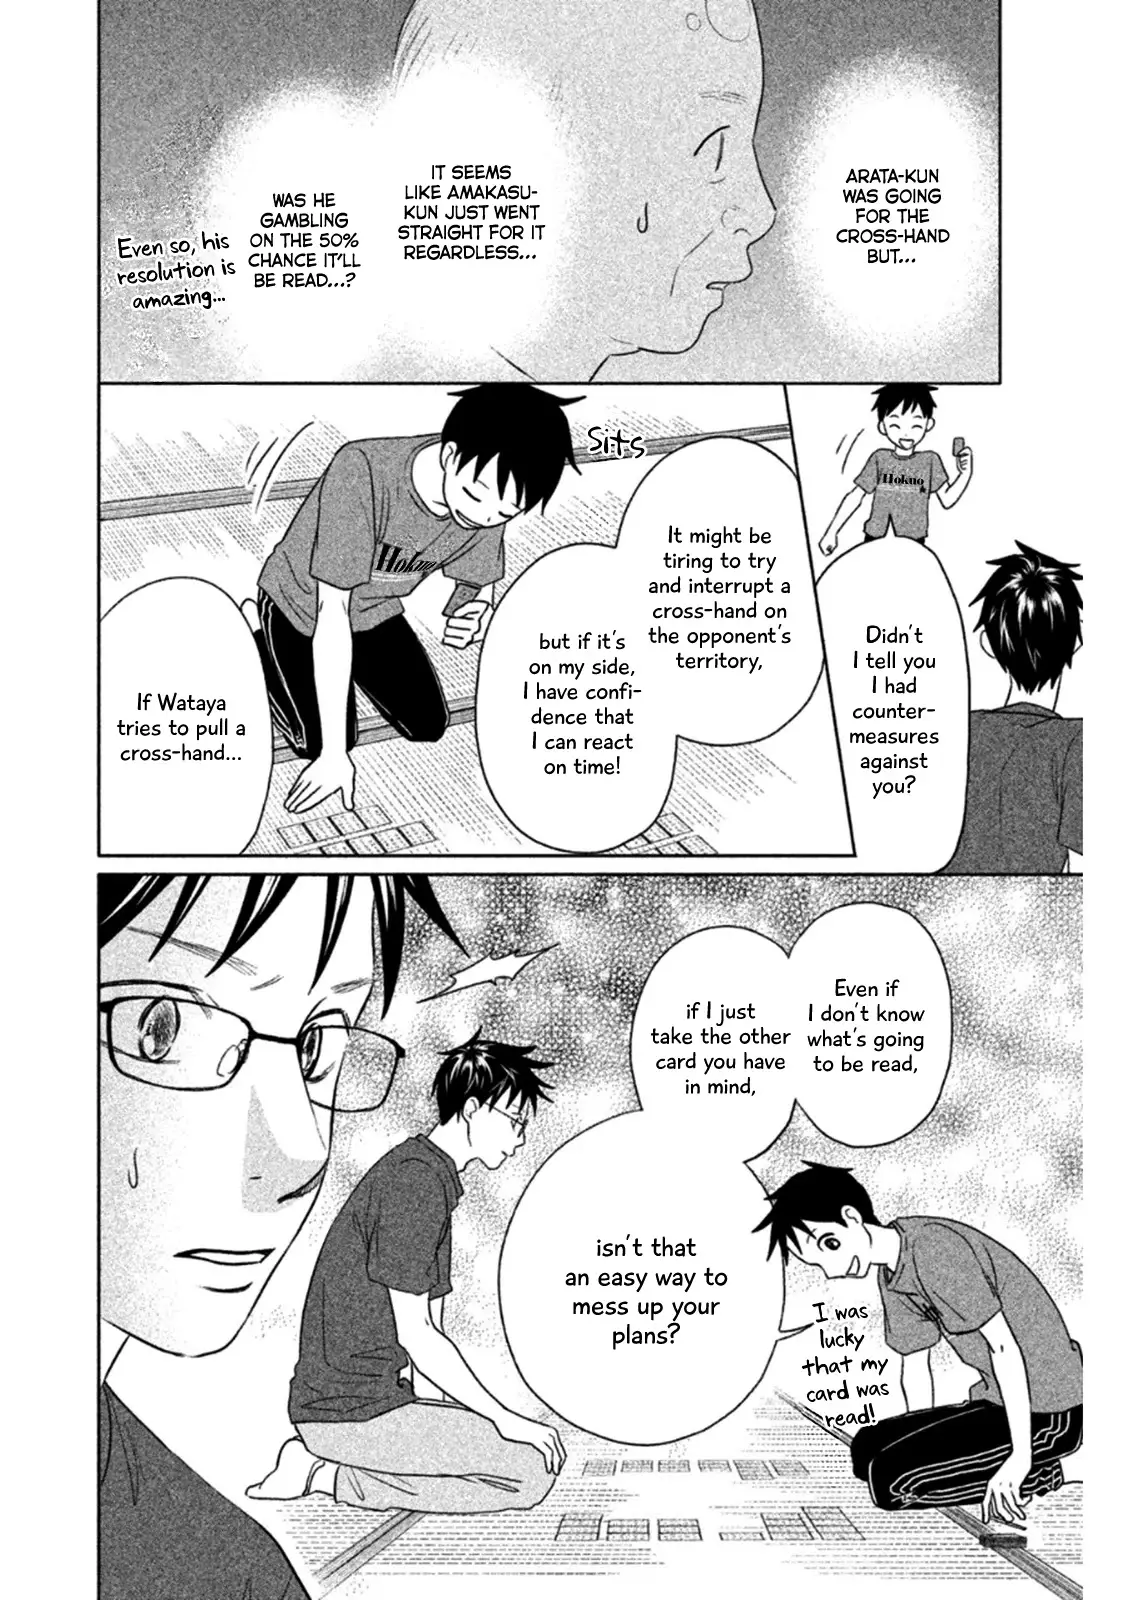 Chihayafuru: Middle School Arc - 10 page 11